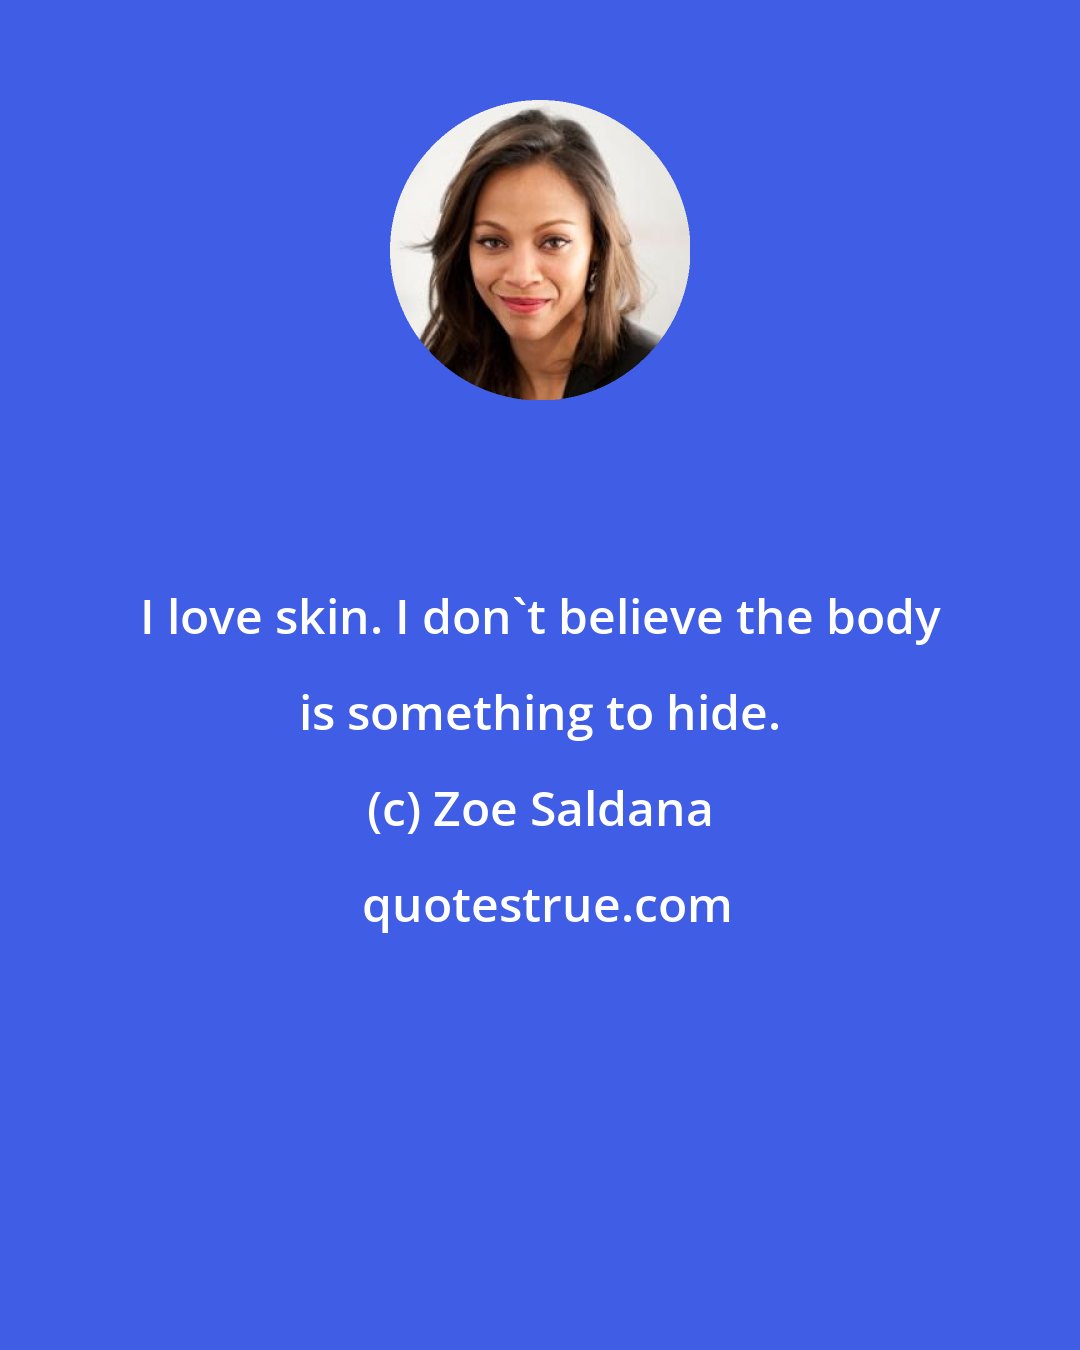 Zoe Saldana: I love skin. I don't believe the body is something to hide.